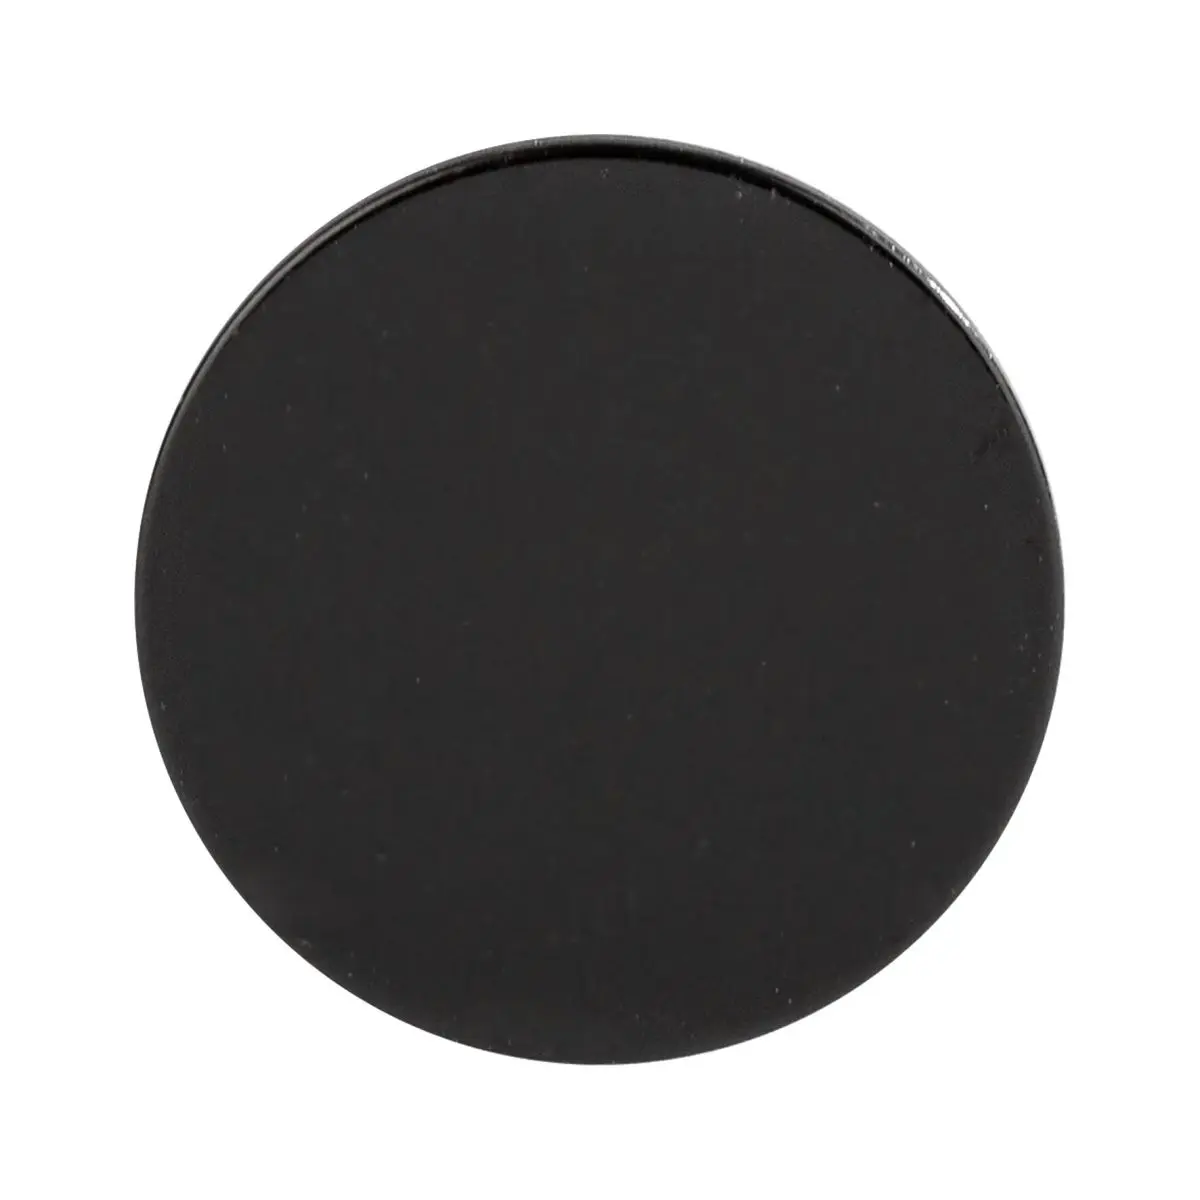 Metallscheibe flexiMAGS - 30 mm, schwarz, 10er Set